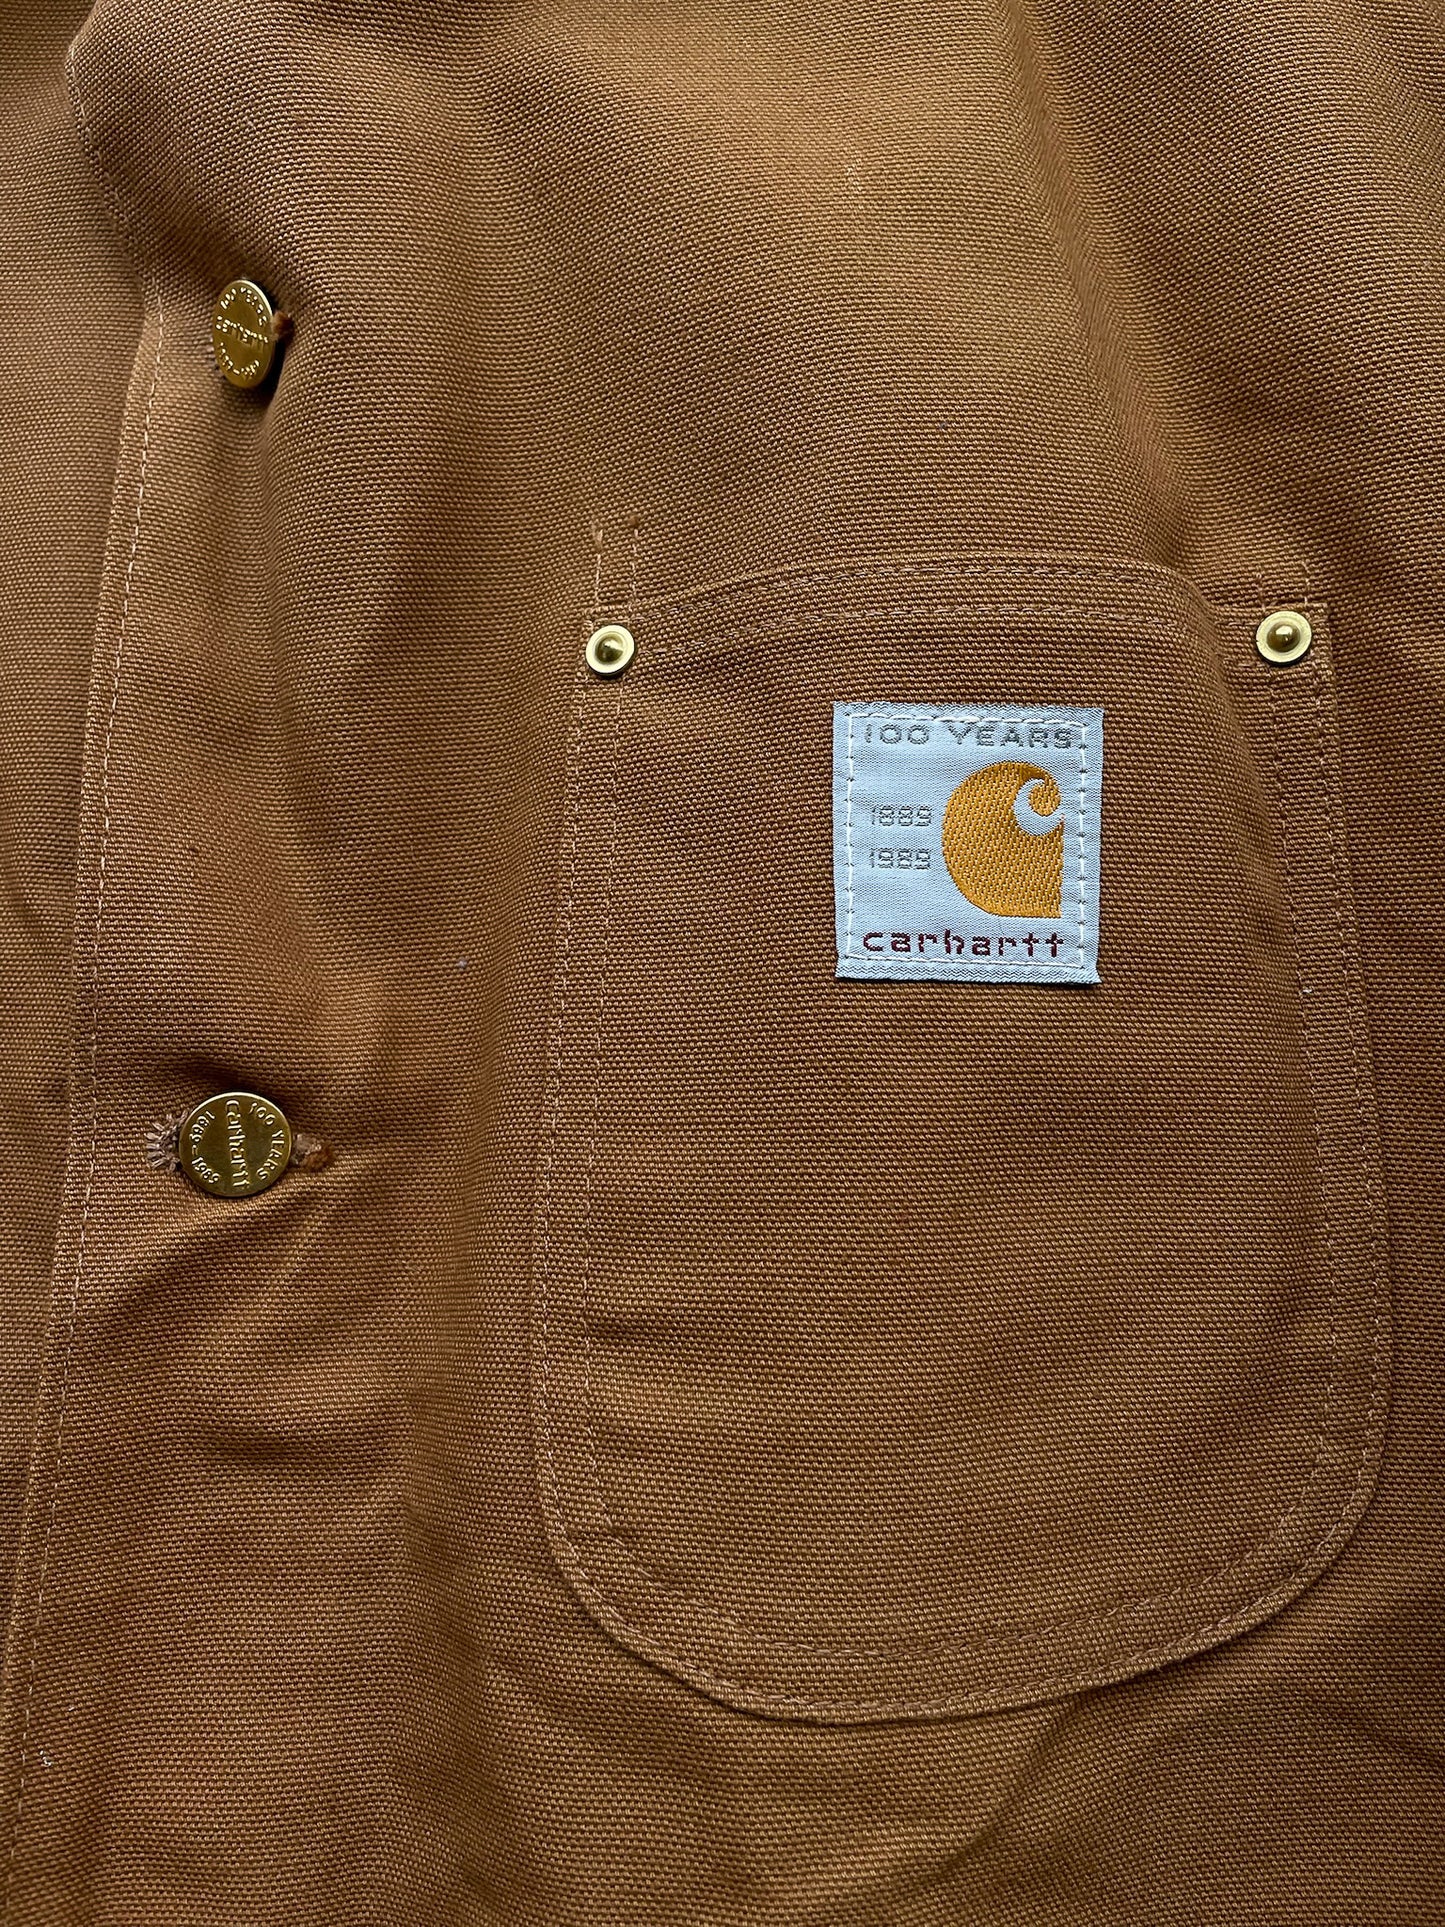 Carhartt 100 Year Chore Jacket—[XL]